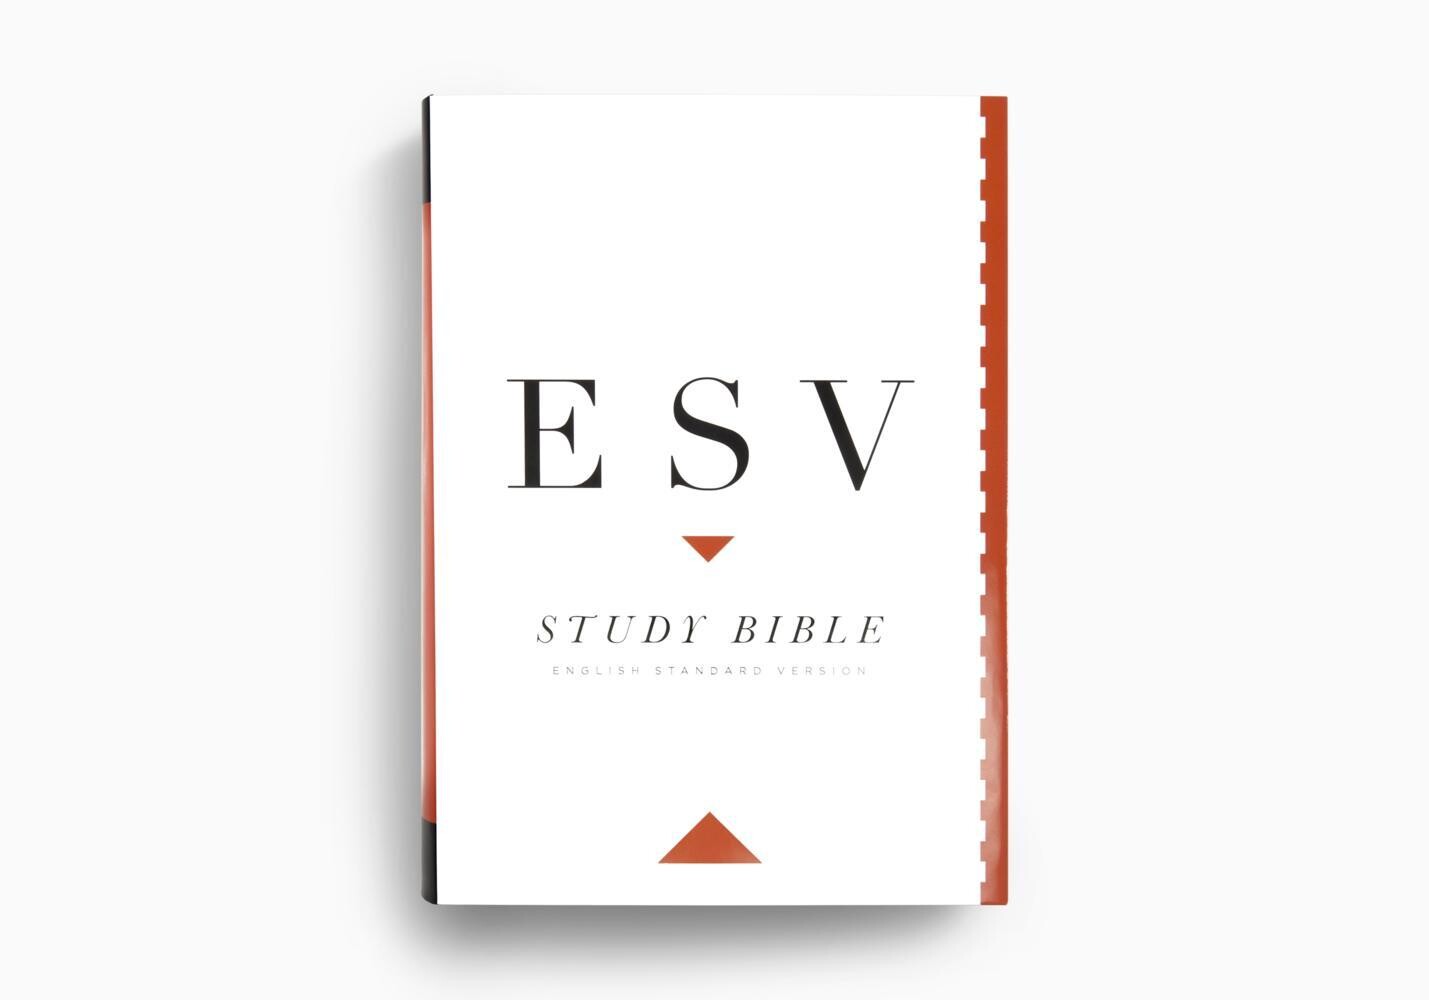 ESV Study Bible Hardcover